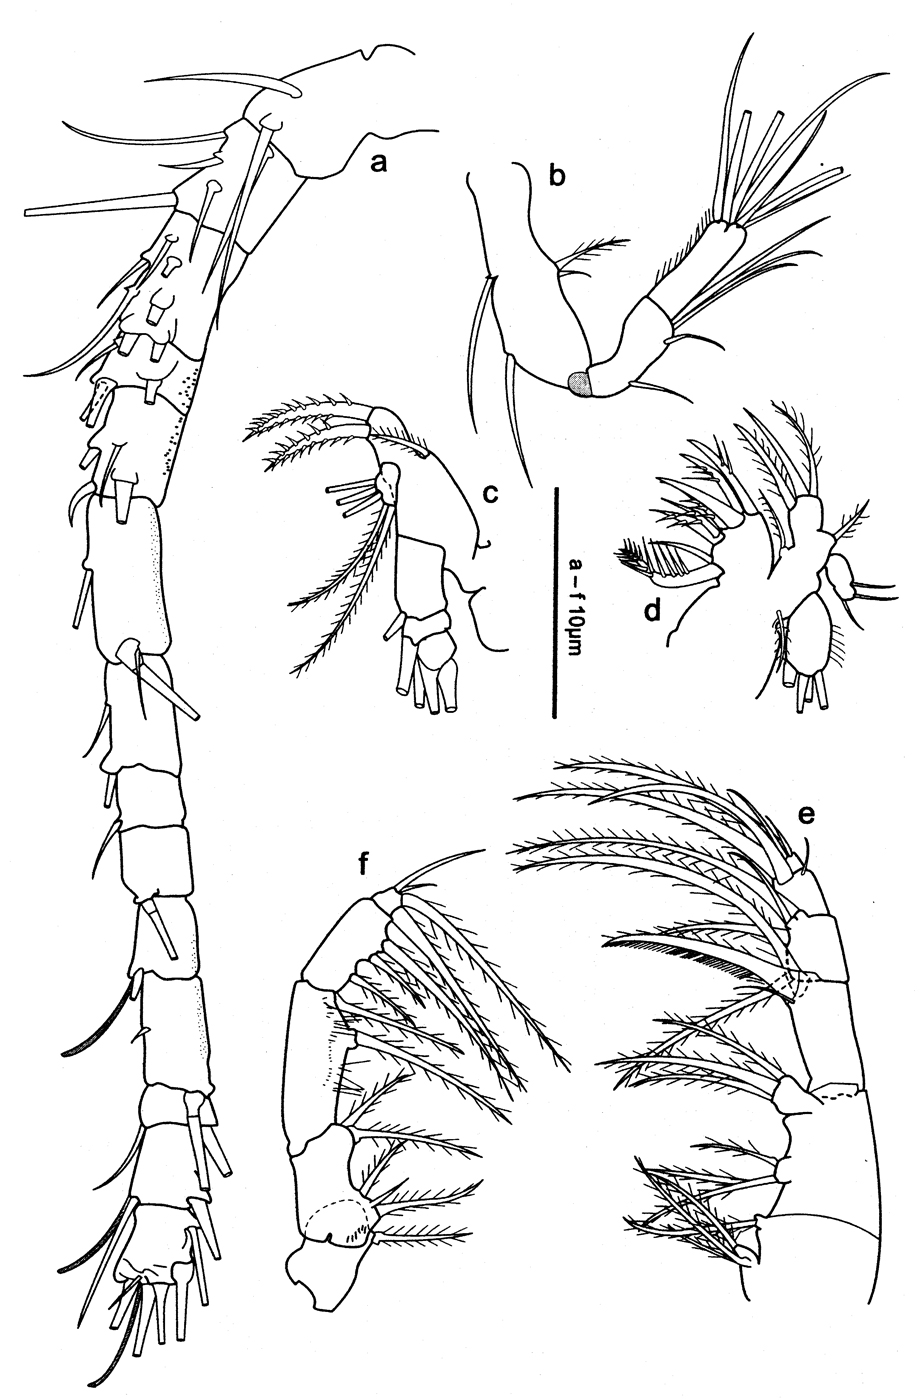 Species Oithona robertsoni - Plate 2 of morphological figures